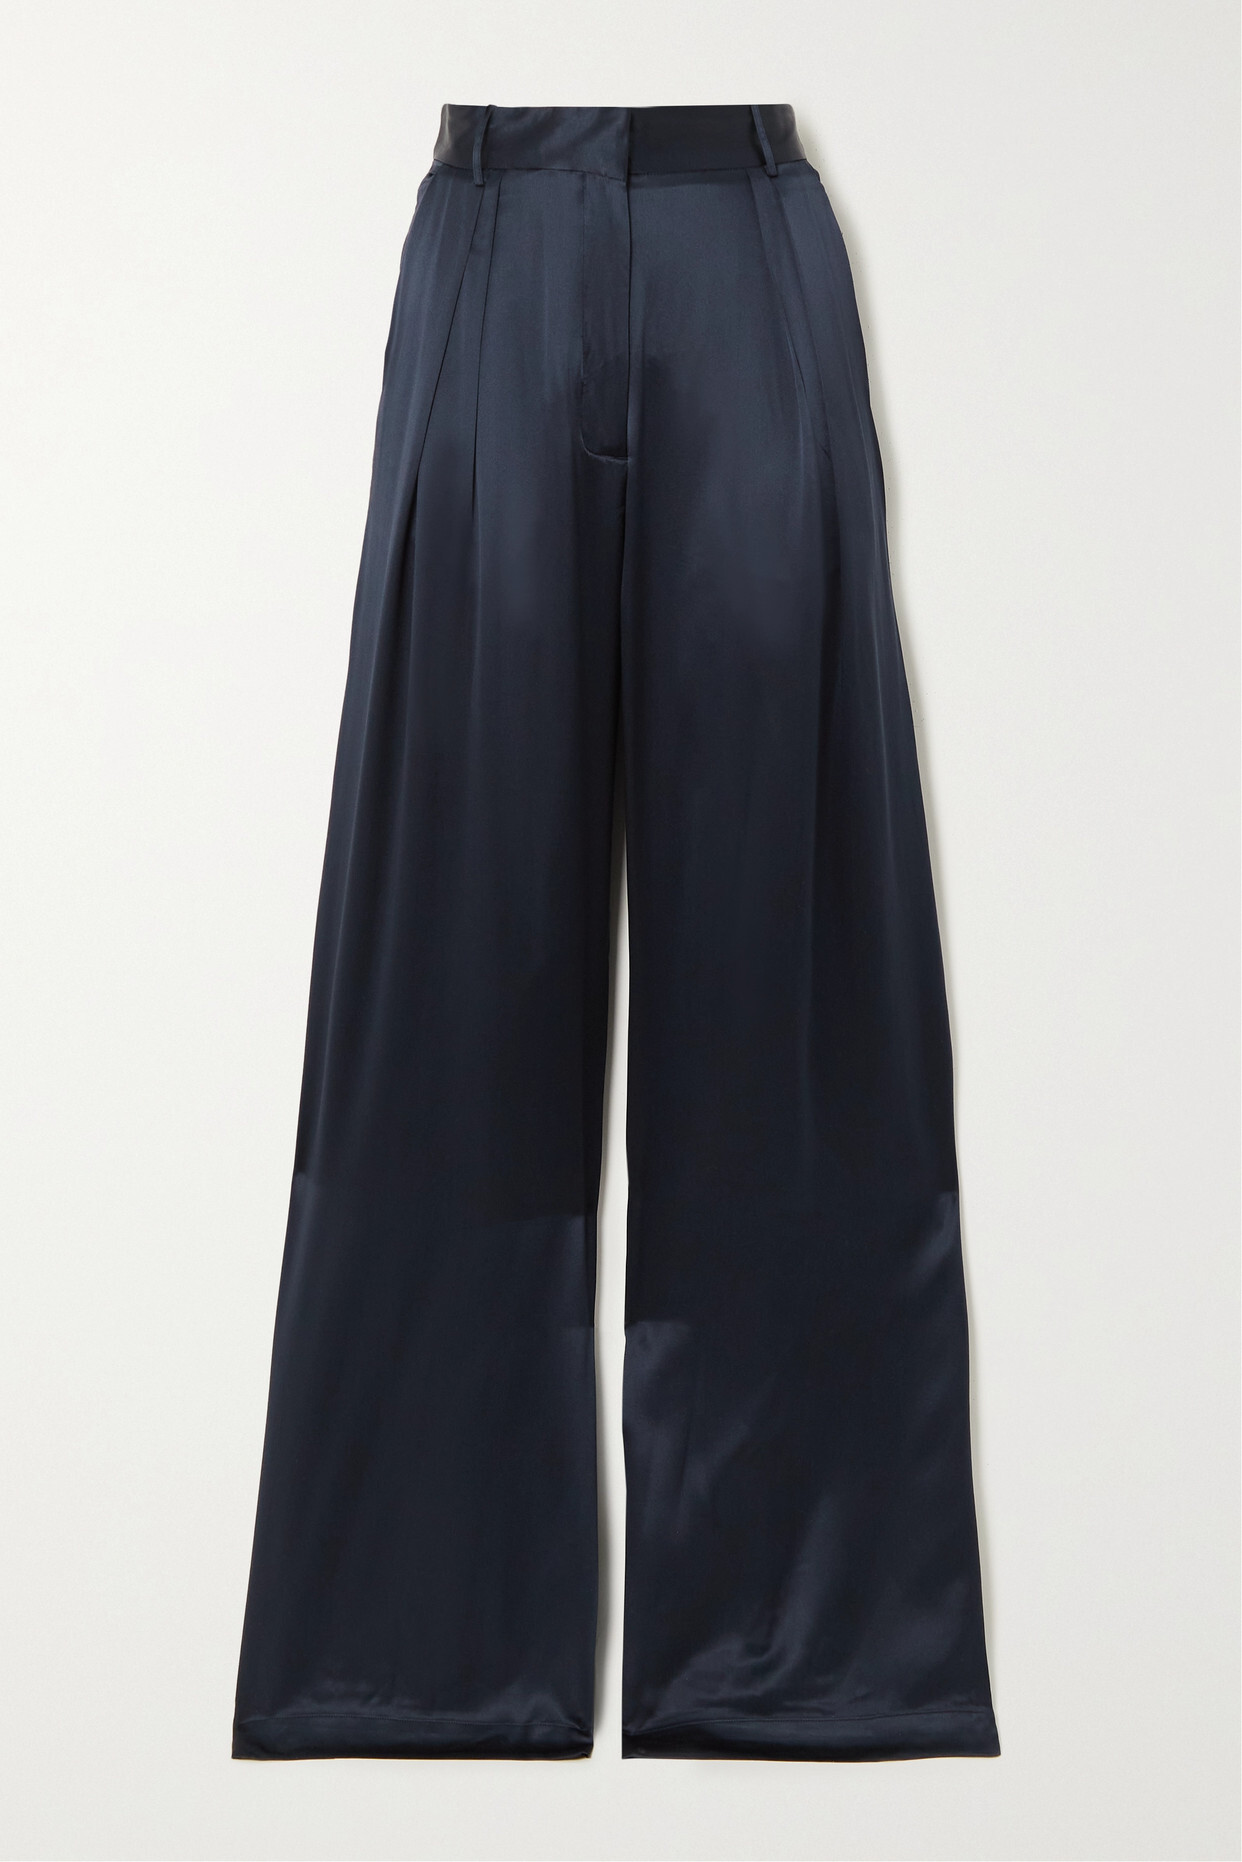 Michael Lo Sordo - Pleated Silk-satin Wide-leg Pants - Blue